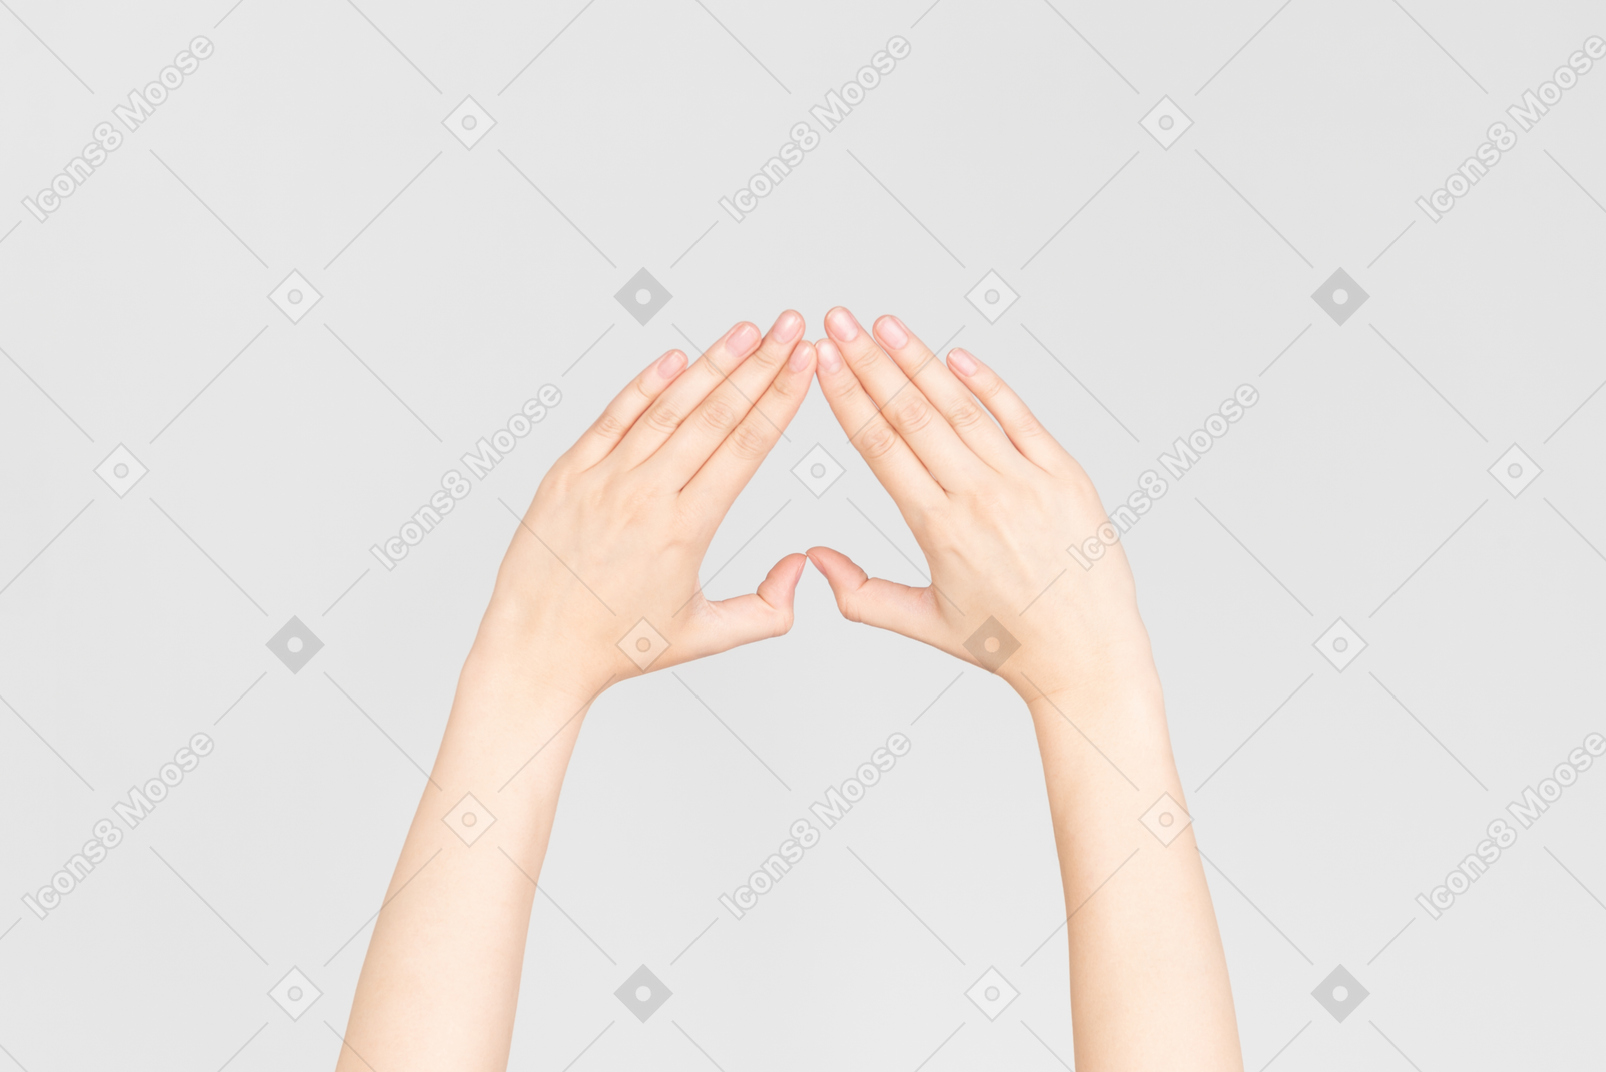 Female hands making an upside down heart